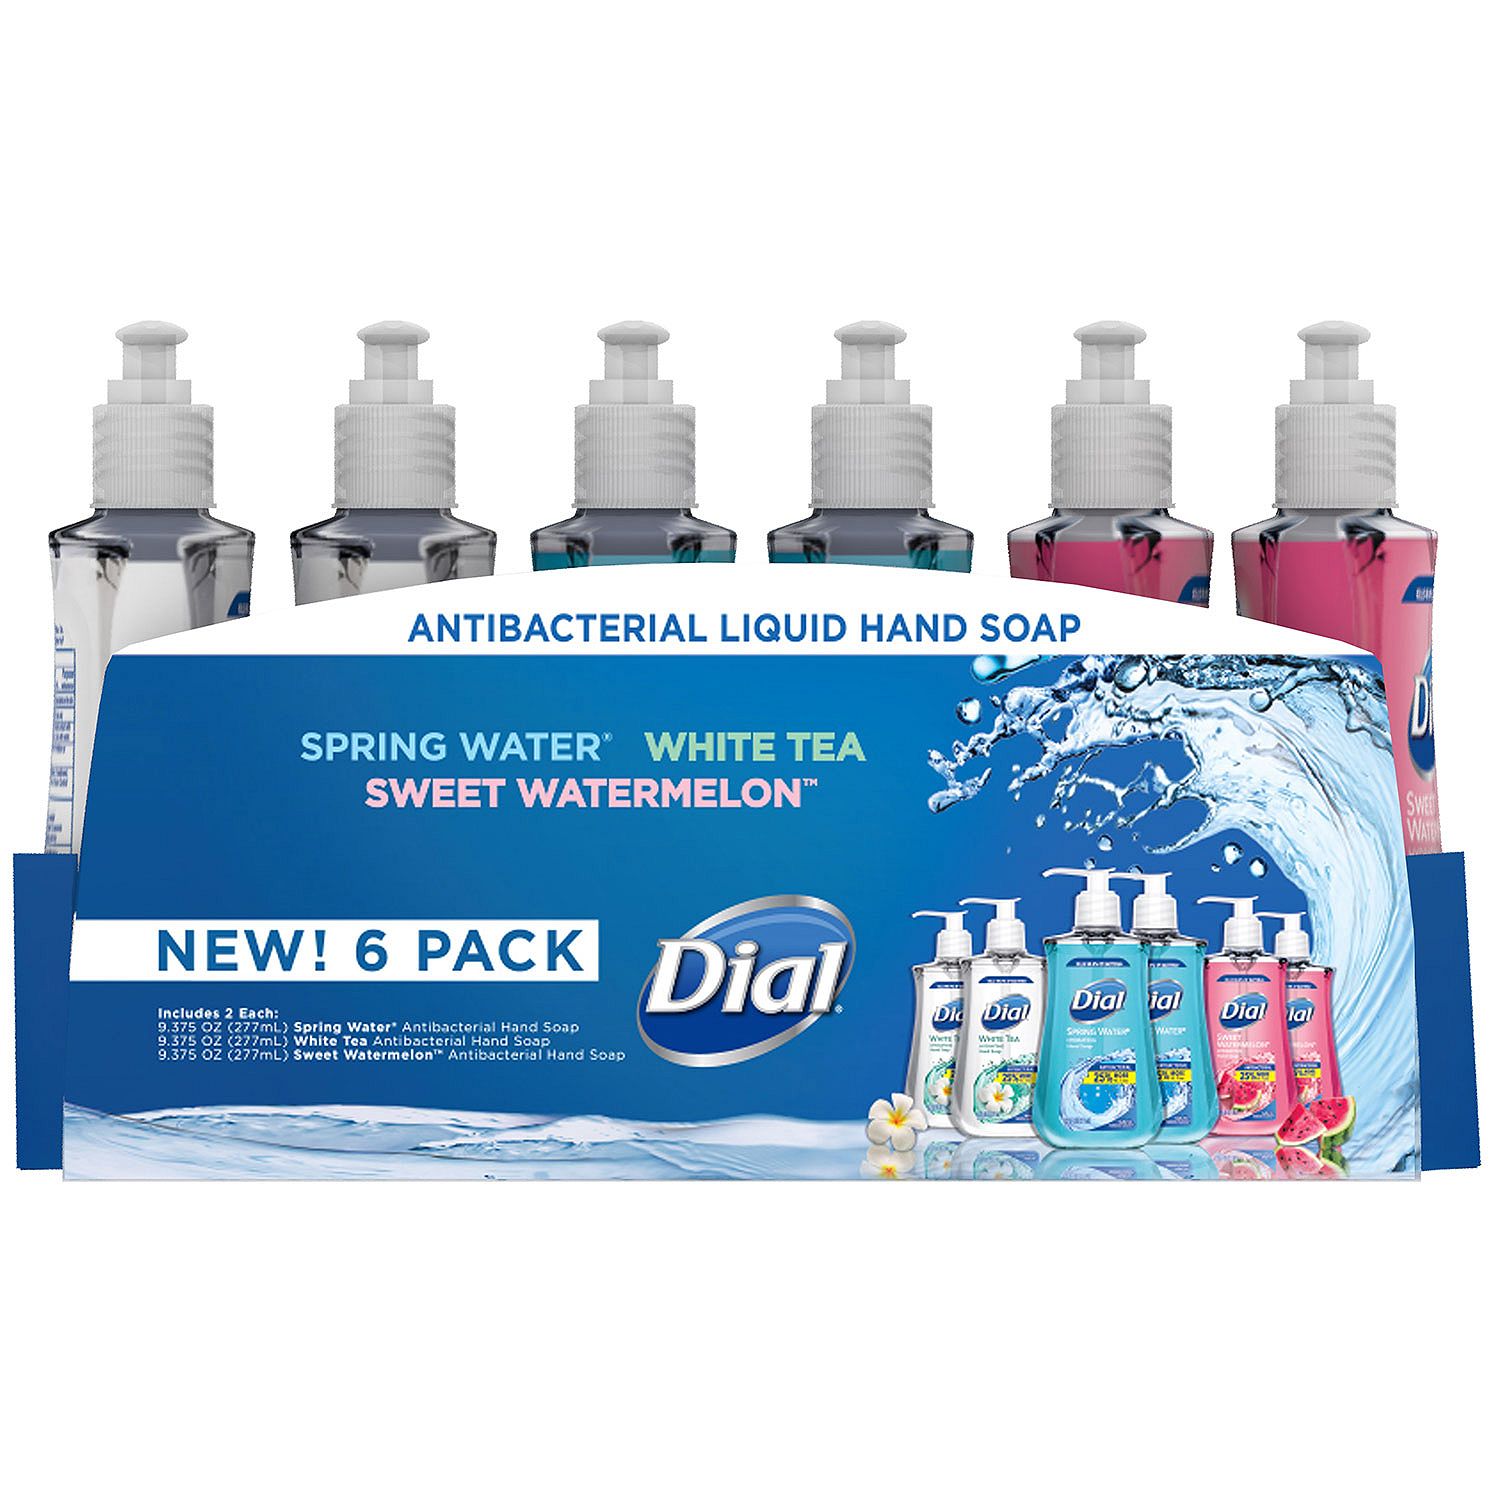 Dial Antibacterial Liquid Hand Soap, Variety Pack (9.375 oz., 6 Pack.) - image 1 of 2